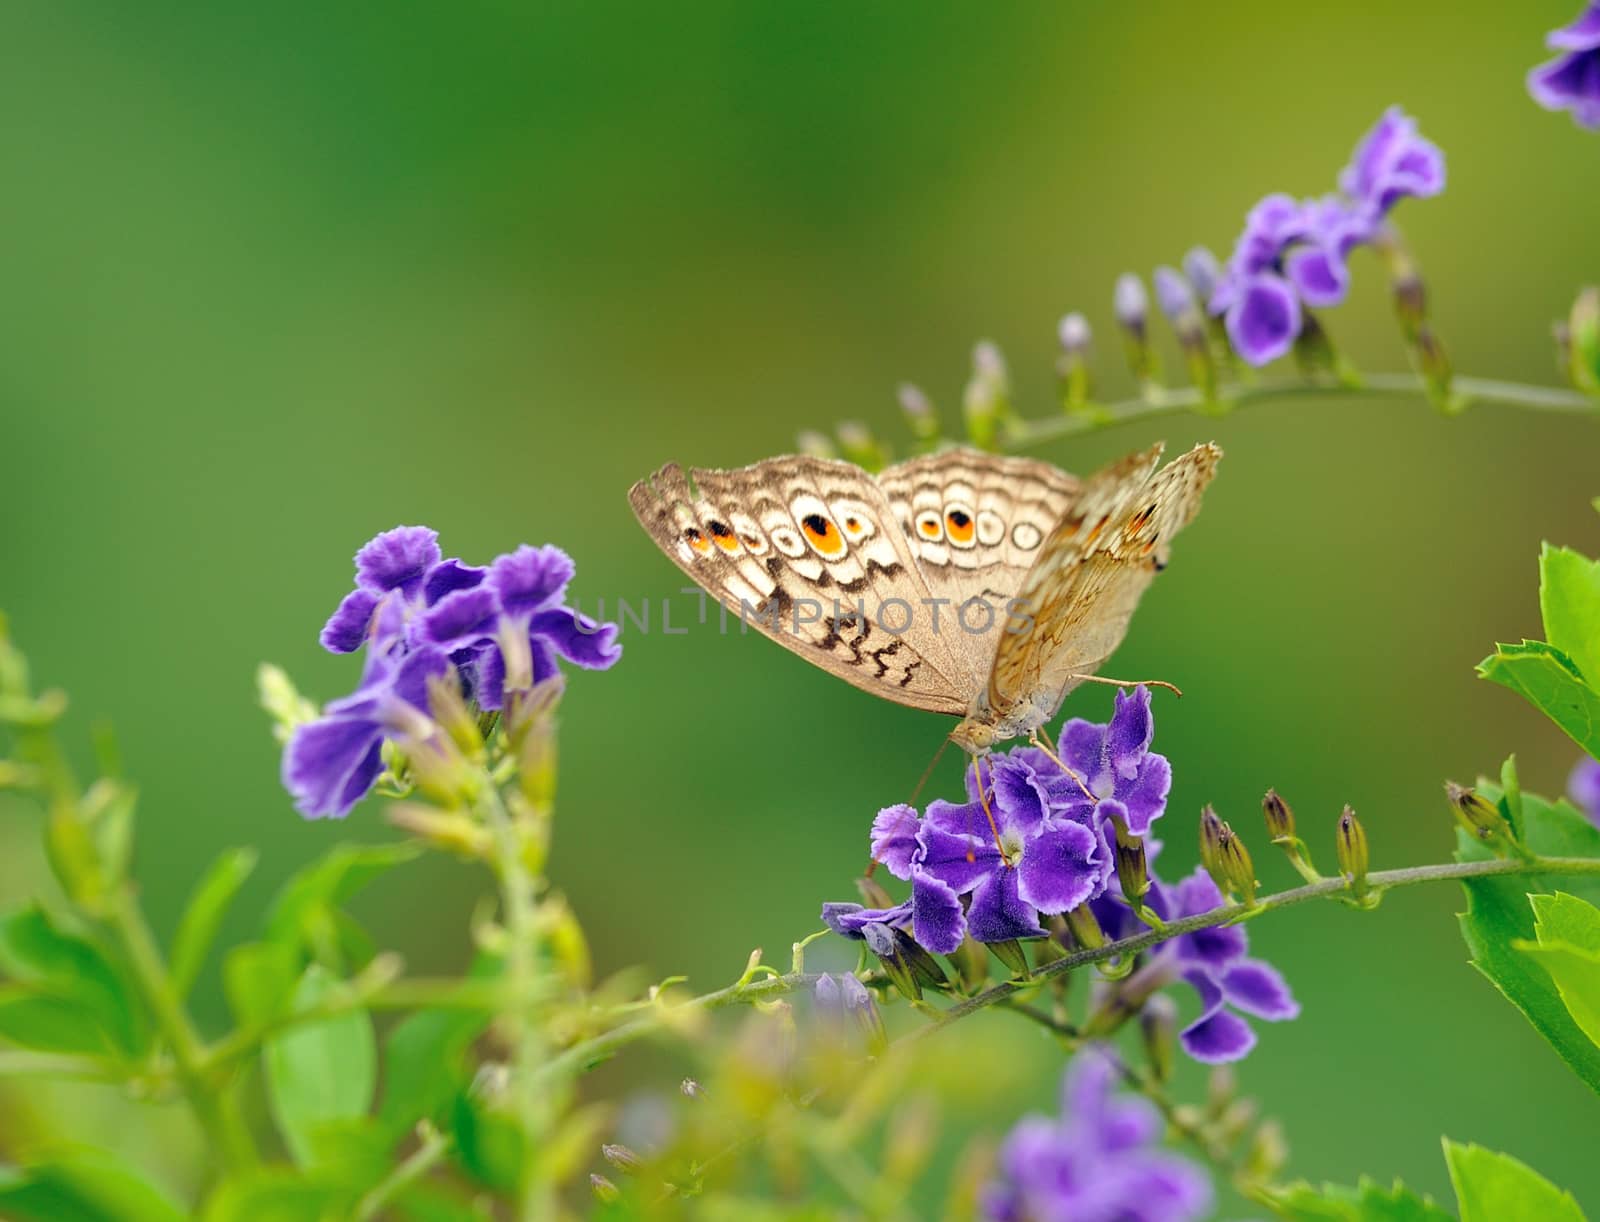  Butterfly on a flower 